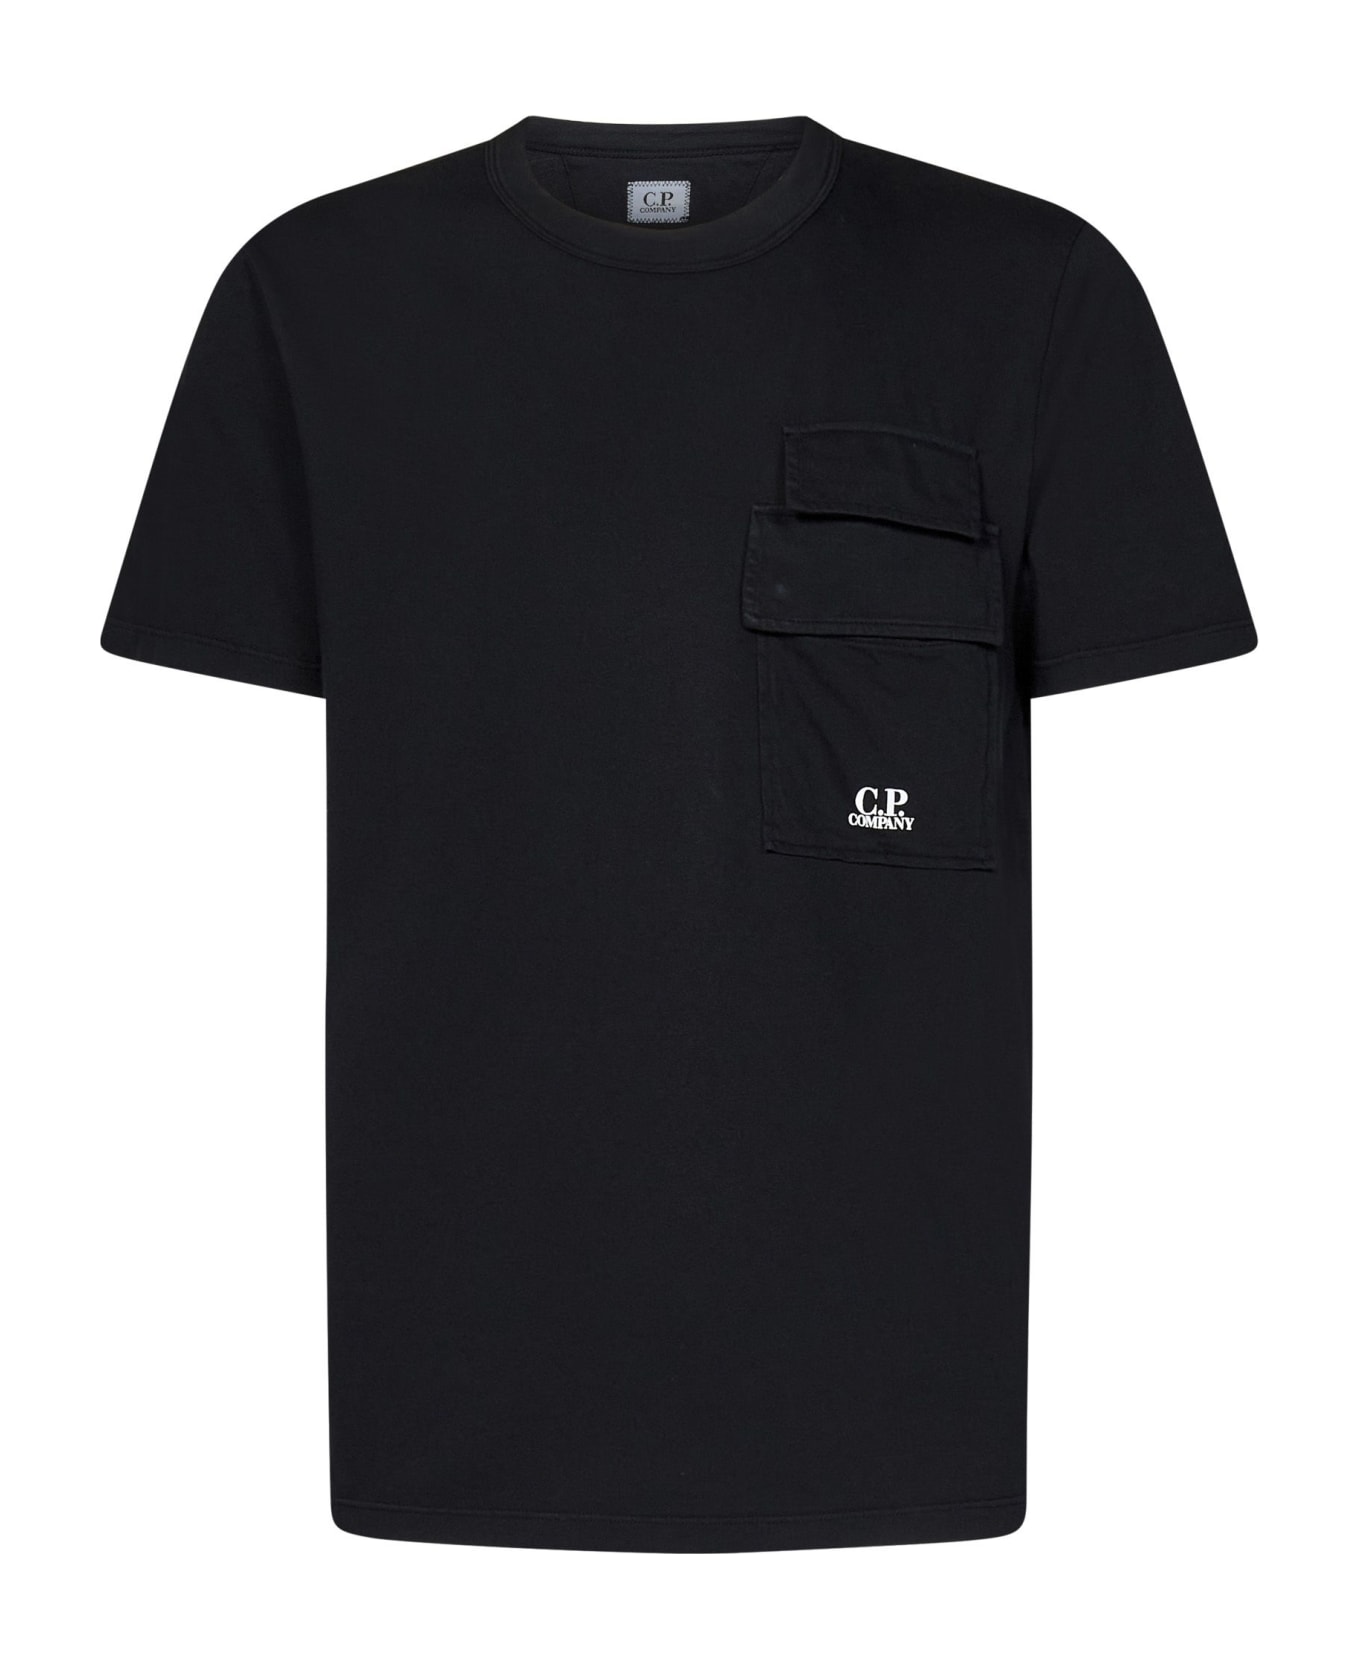 C.P. Company T-shirt - Black シャツ